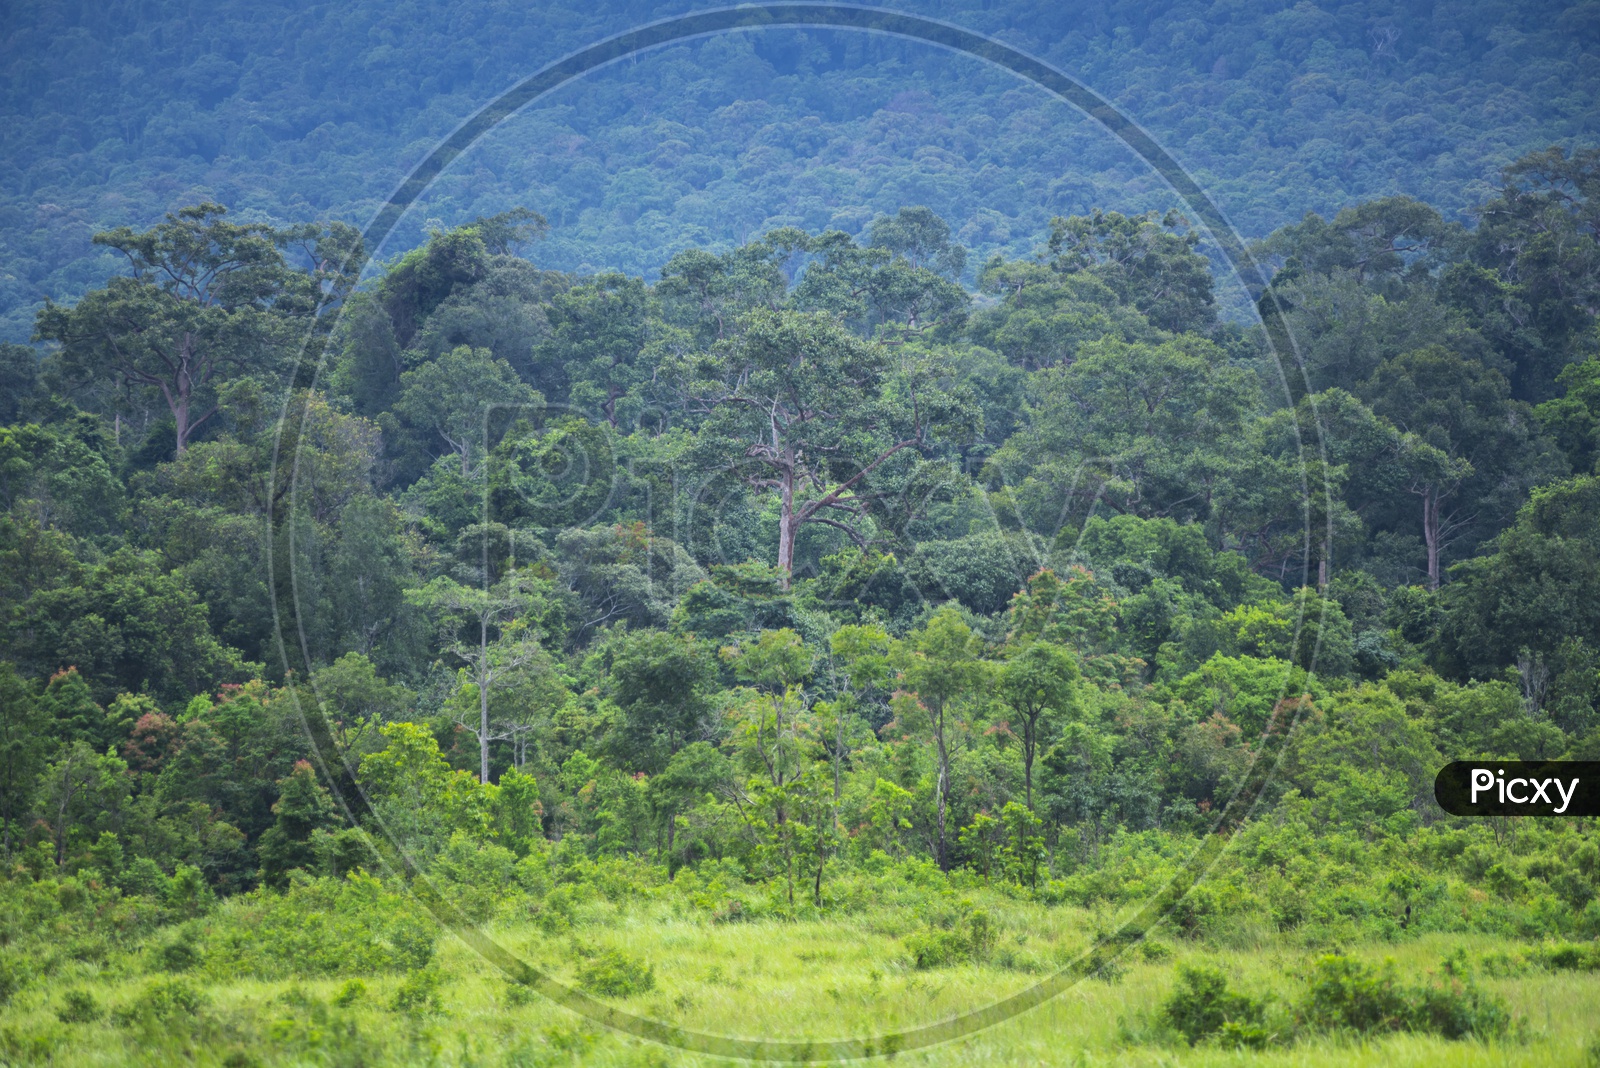 A Landscape of tropical rain forest in  Khao Yai National Park, Thailand